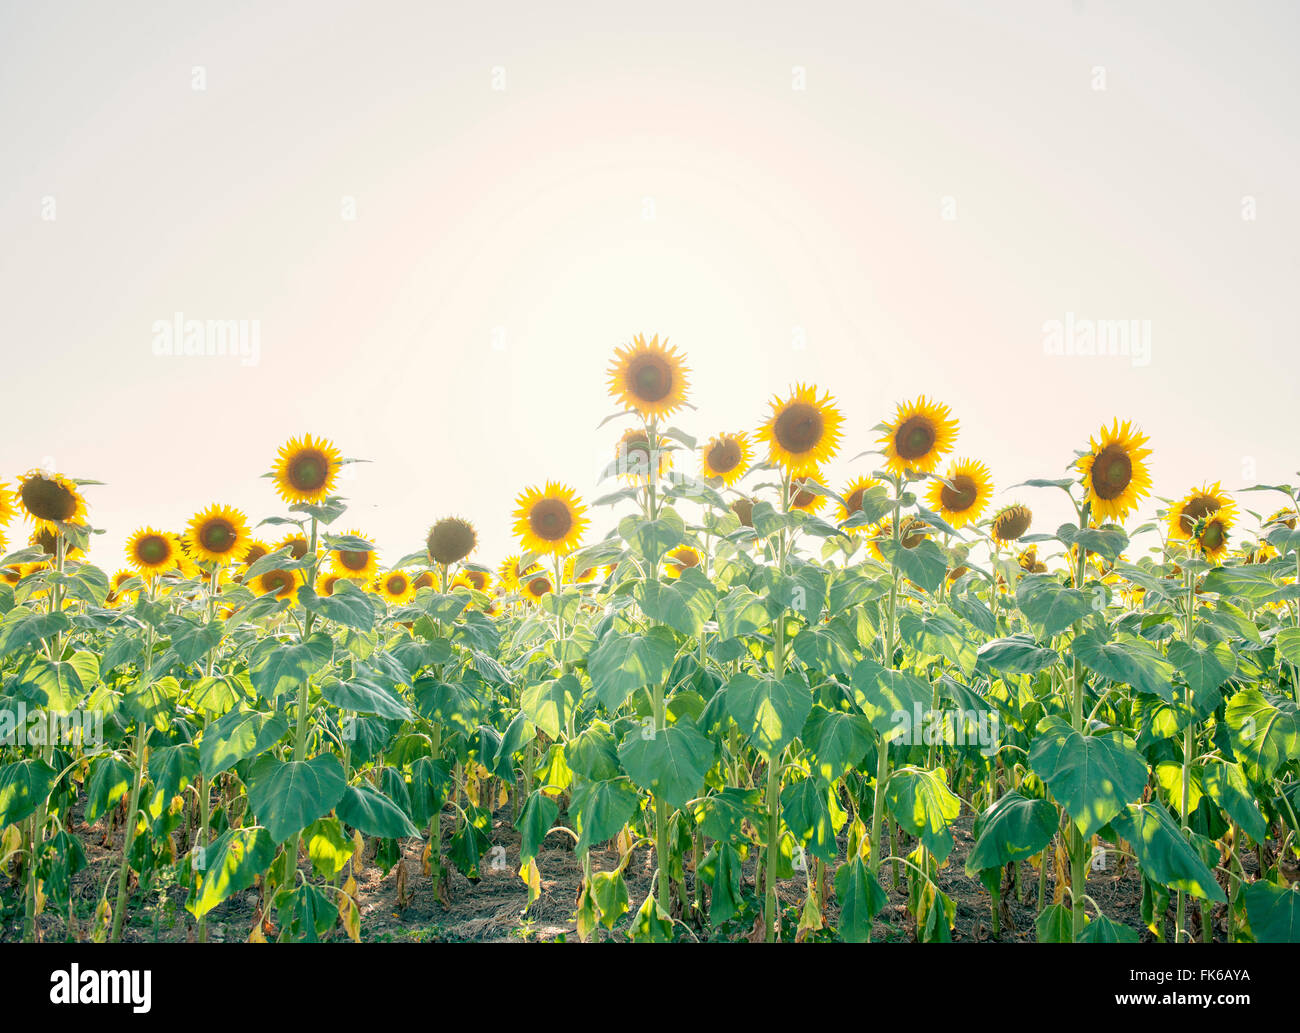 Sunflowers in full bloom, France, Europe Stock Photo